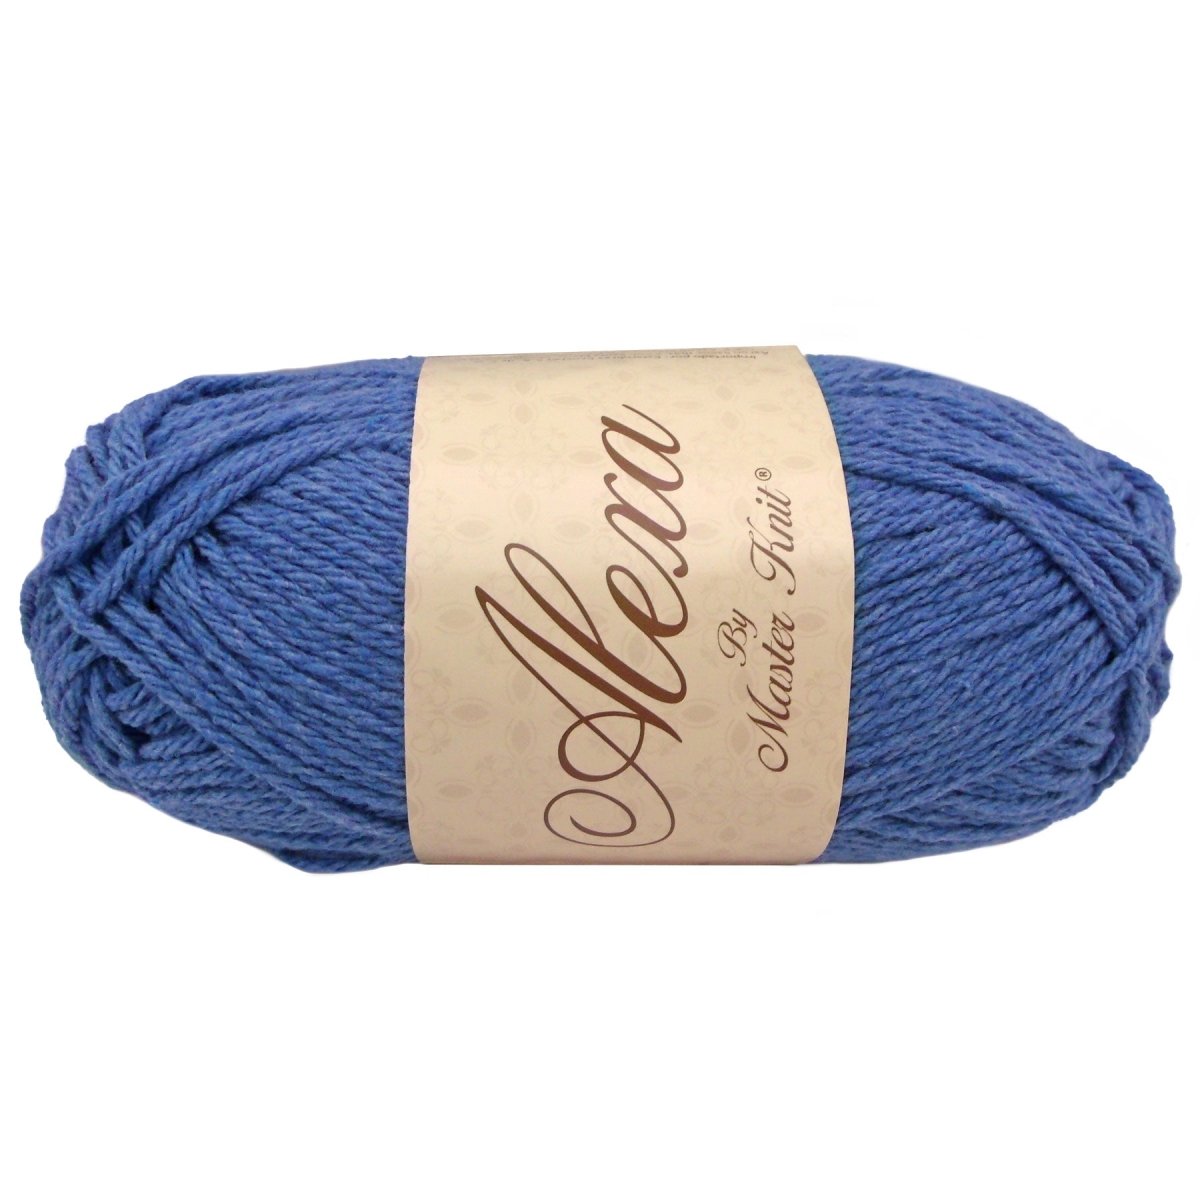 ALEXA - Crochetstores9340-176